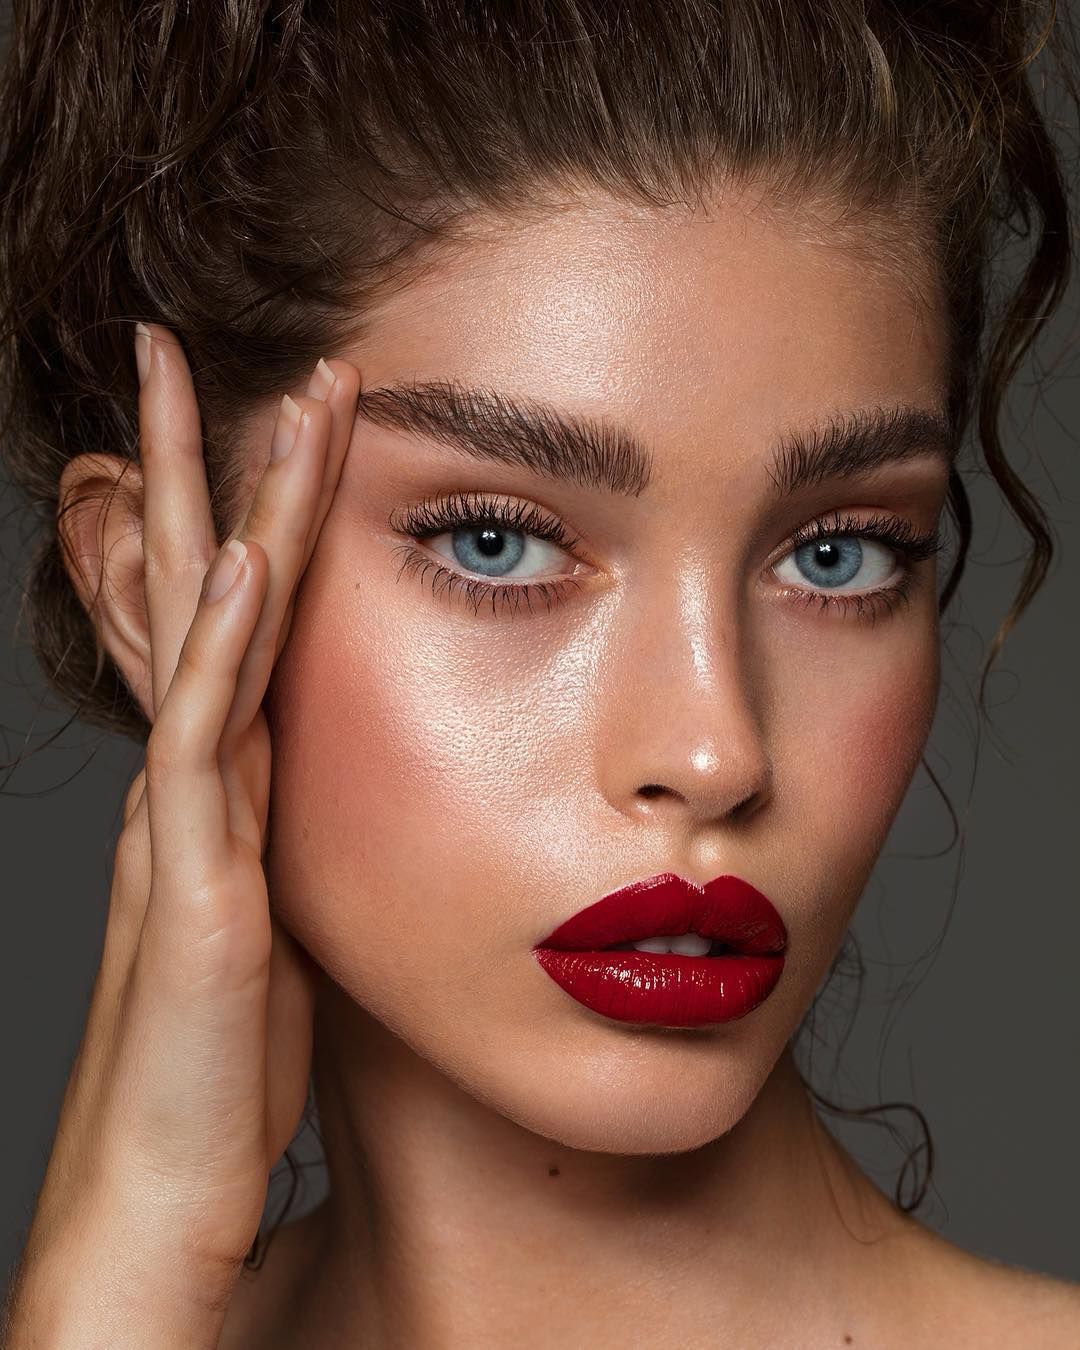 19 beauty Photoshoot models ideas